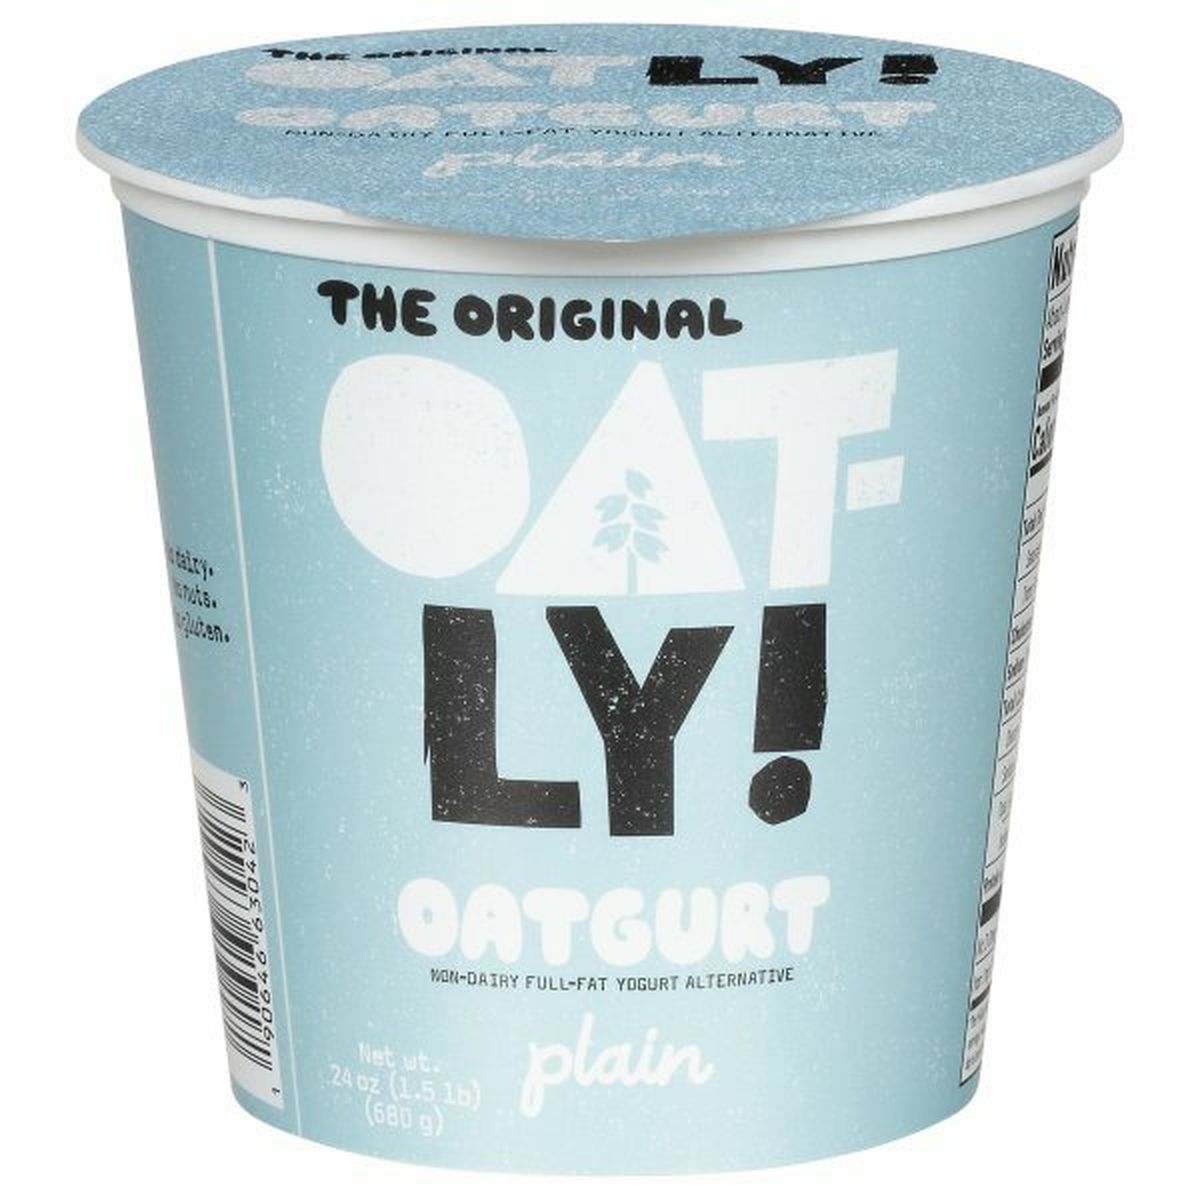 Calories in Oatly Oatgurt, Plain